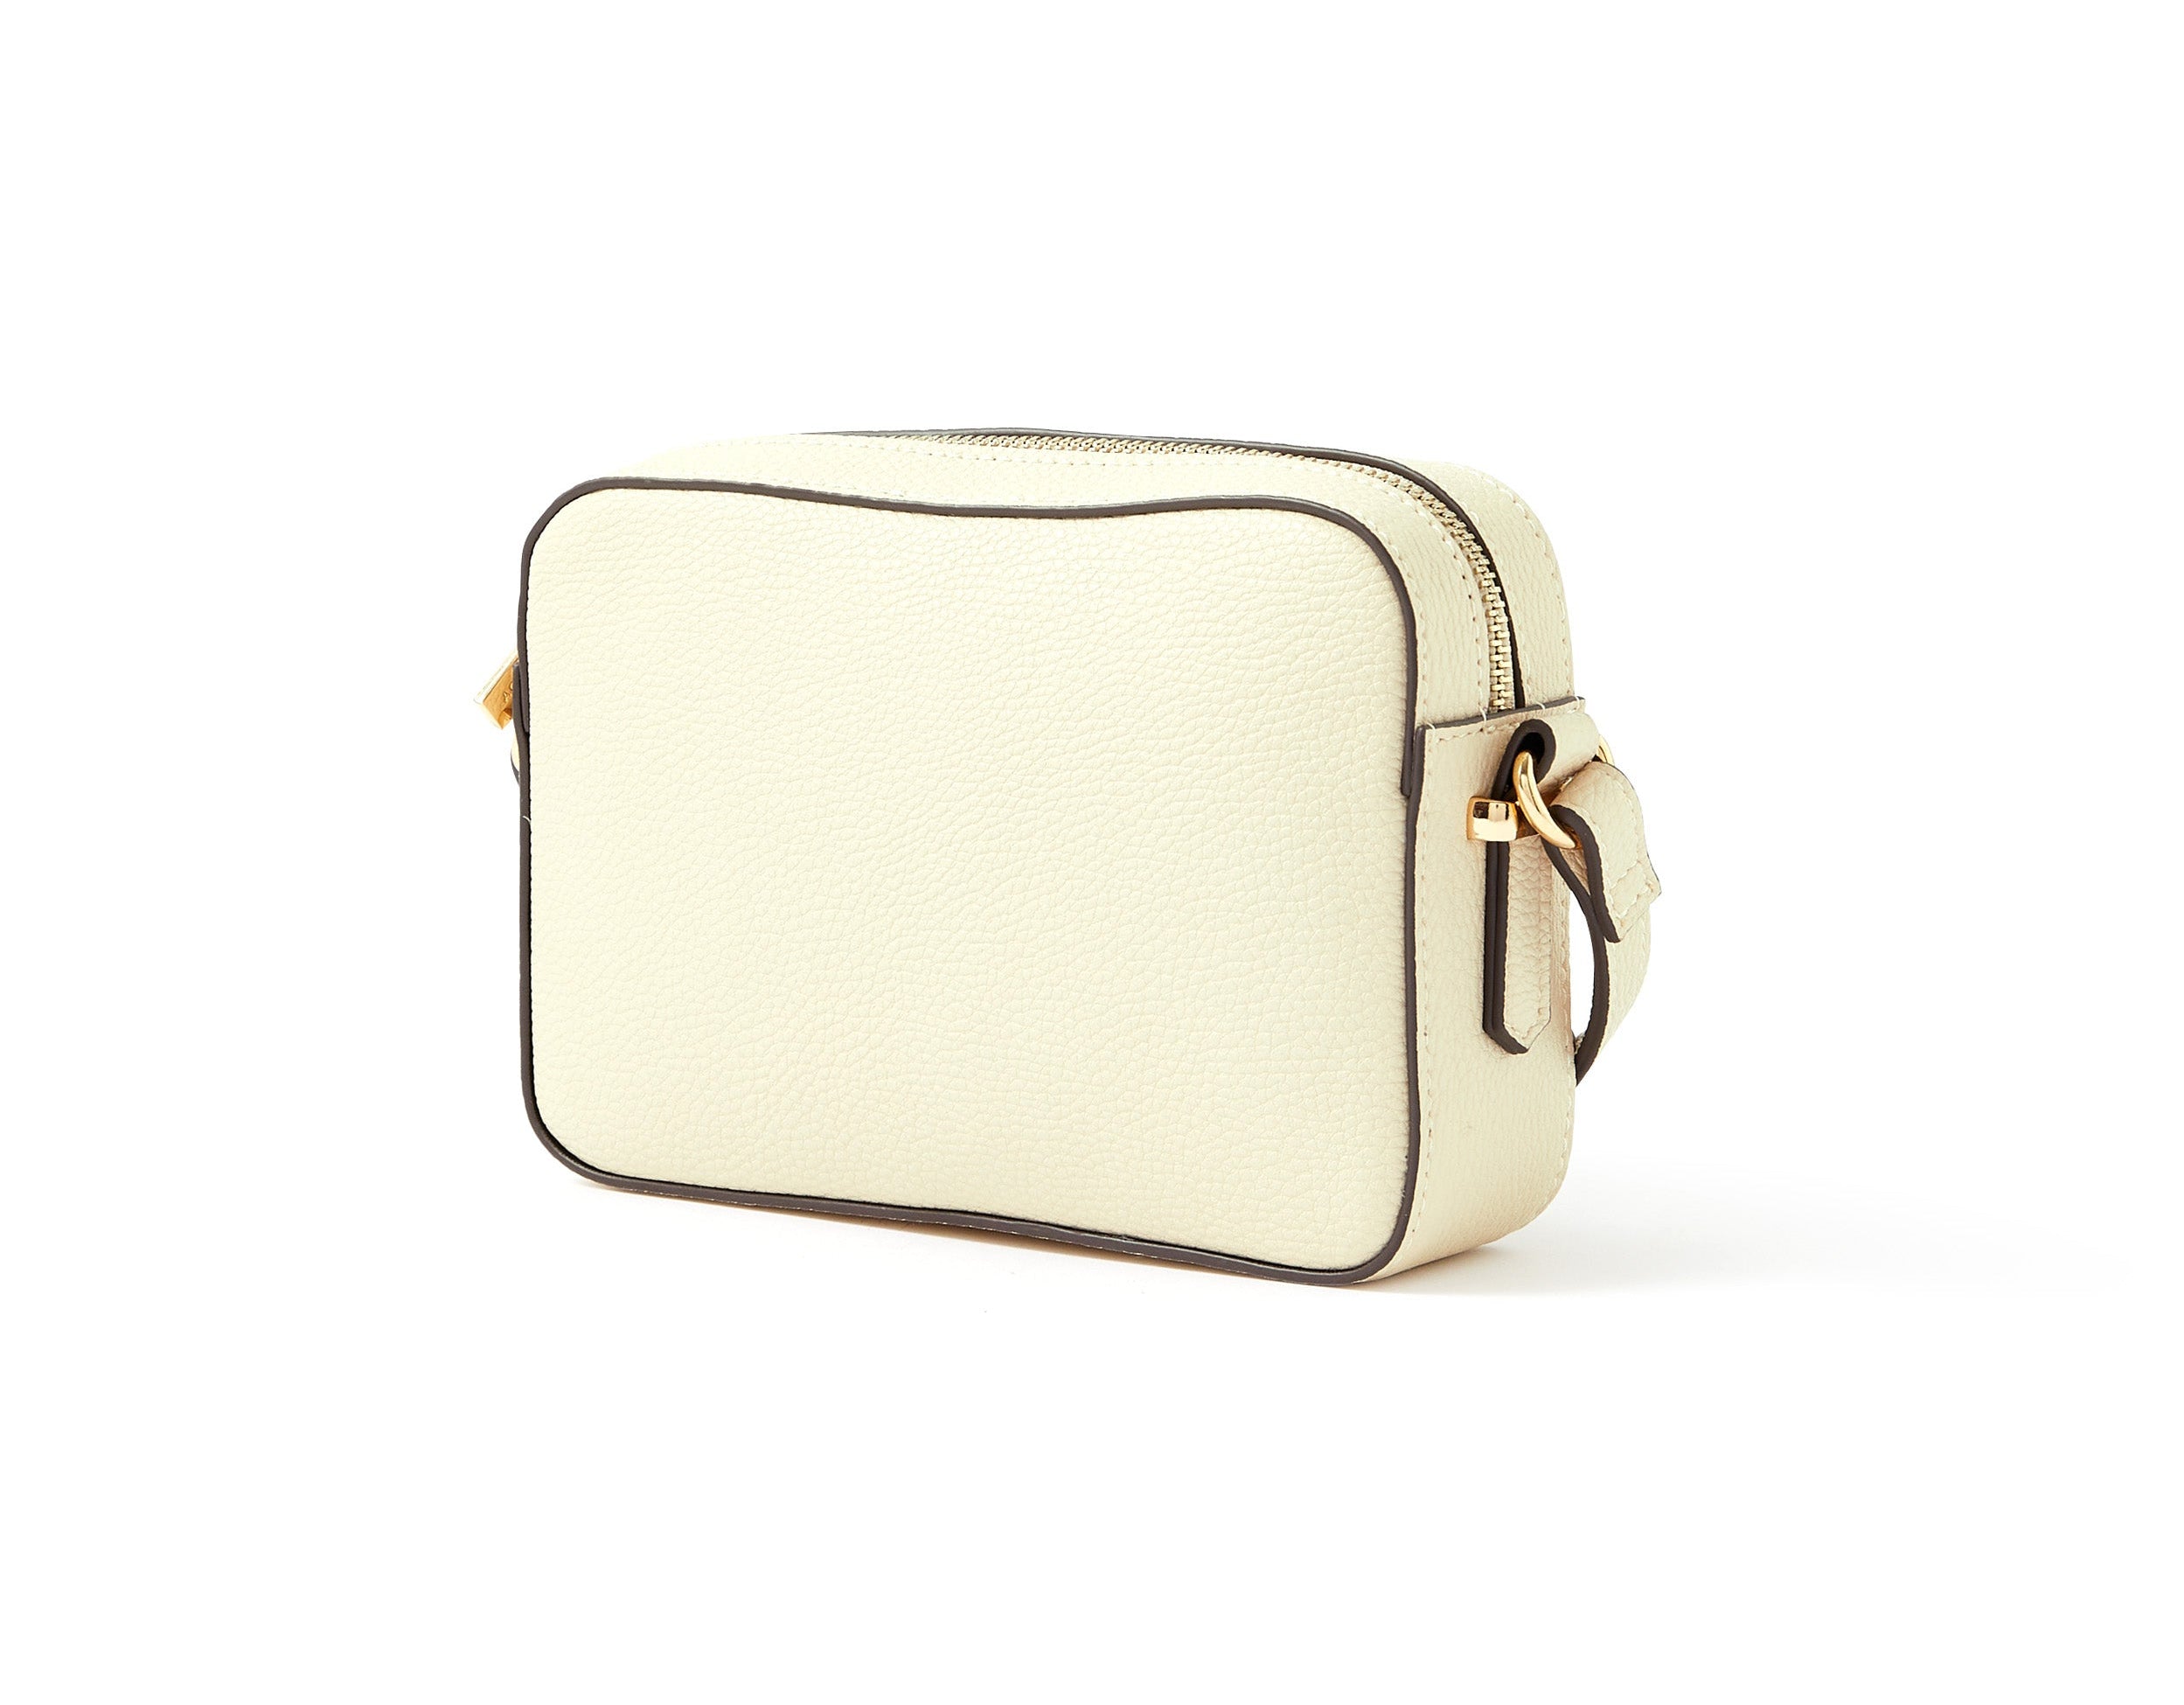 Accessorize London women's Faux Leather Cream Piper Sling bag